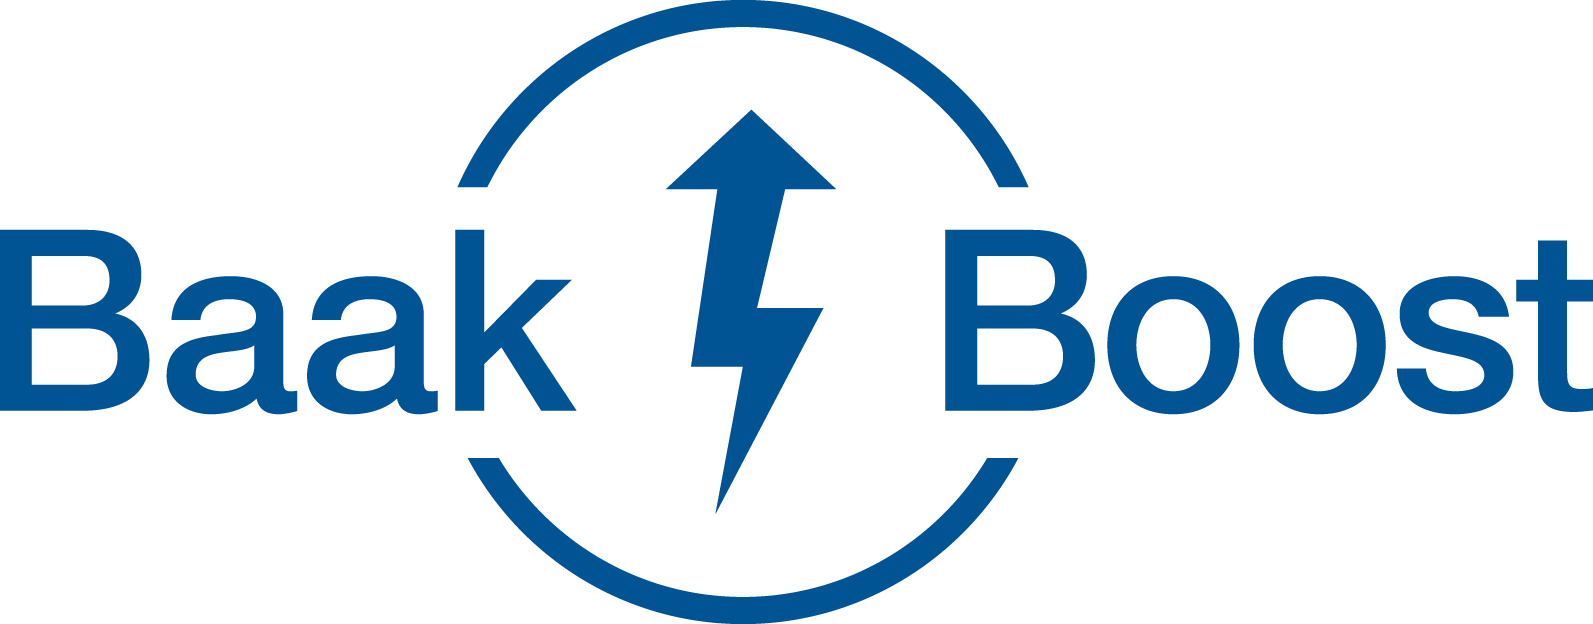 BaakBoost Logo.